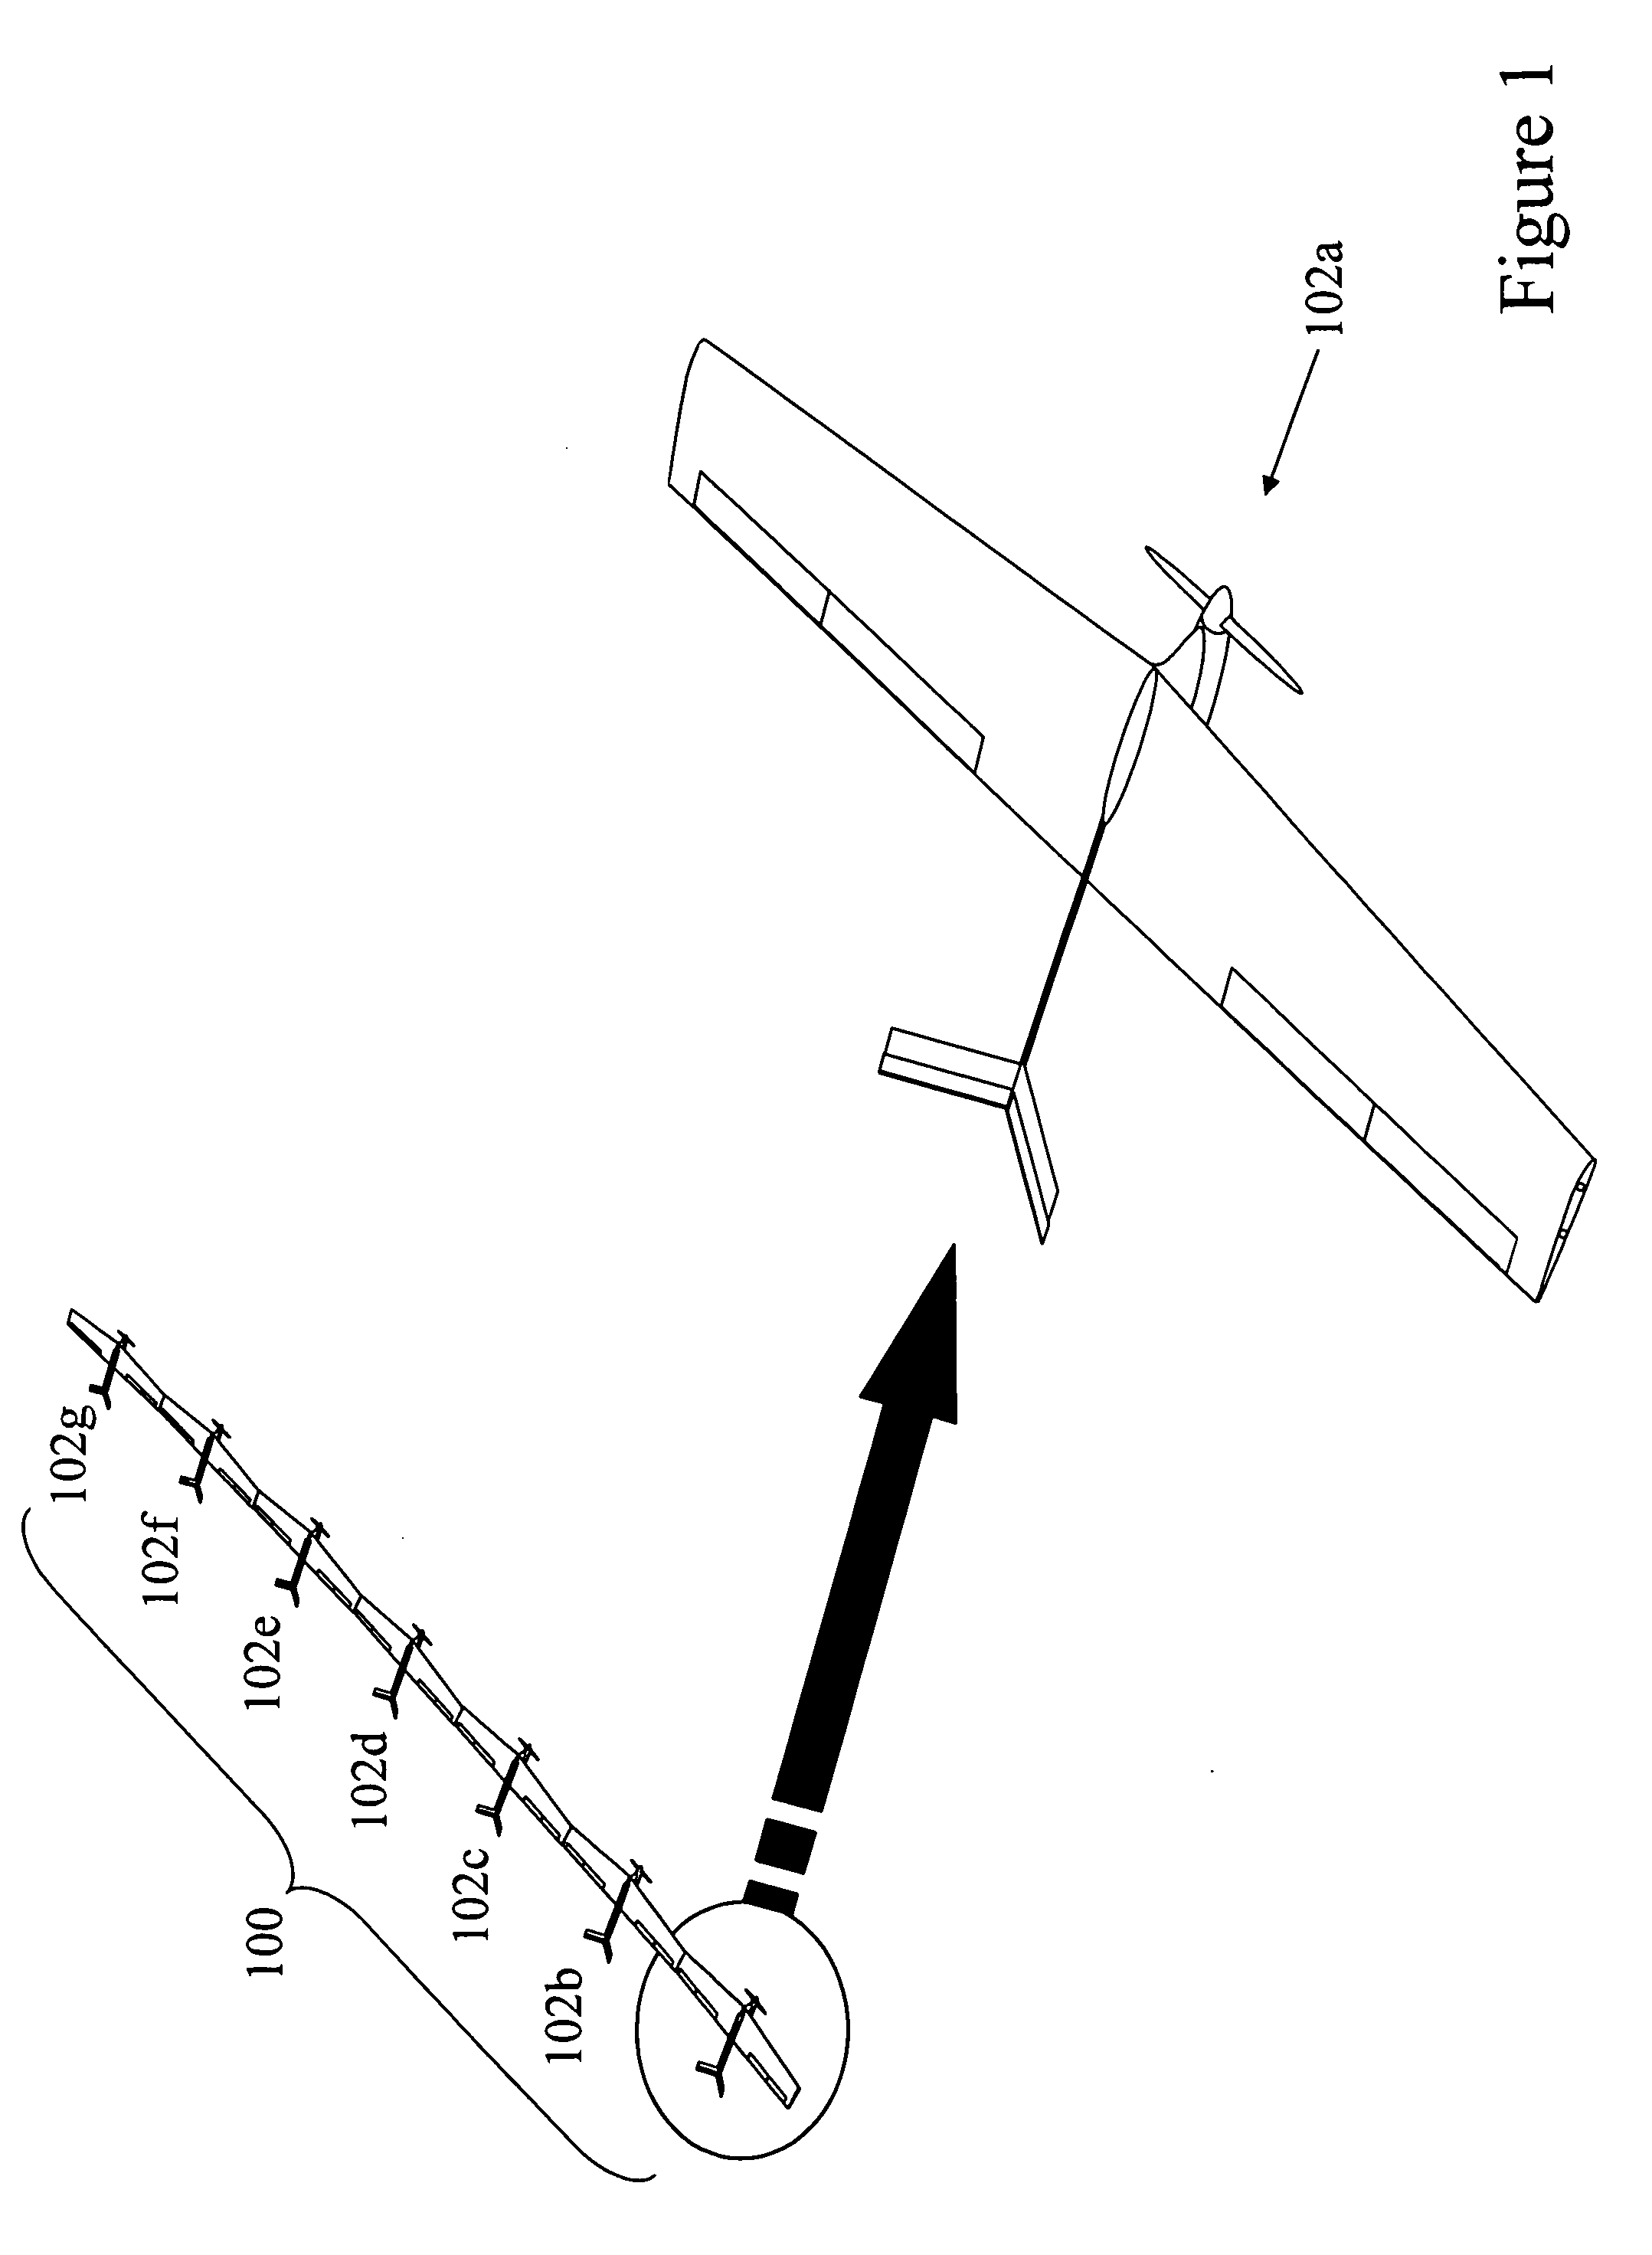 Modular articulated-wing aircraft